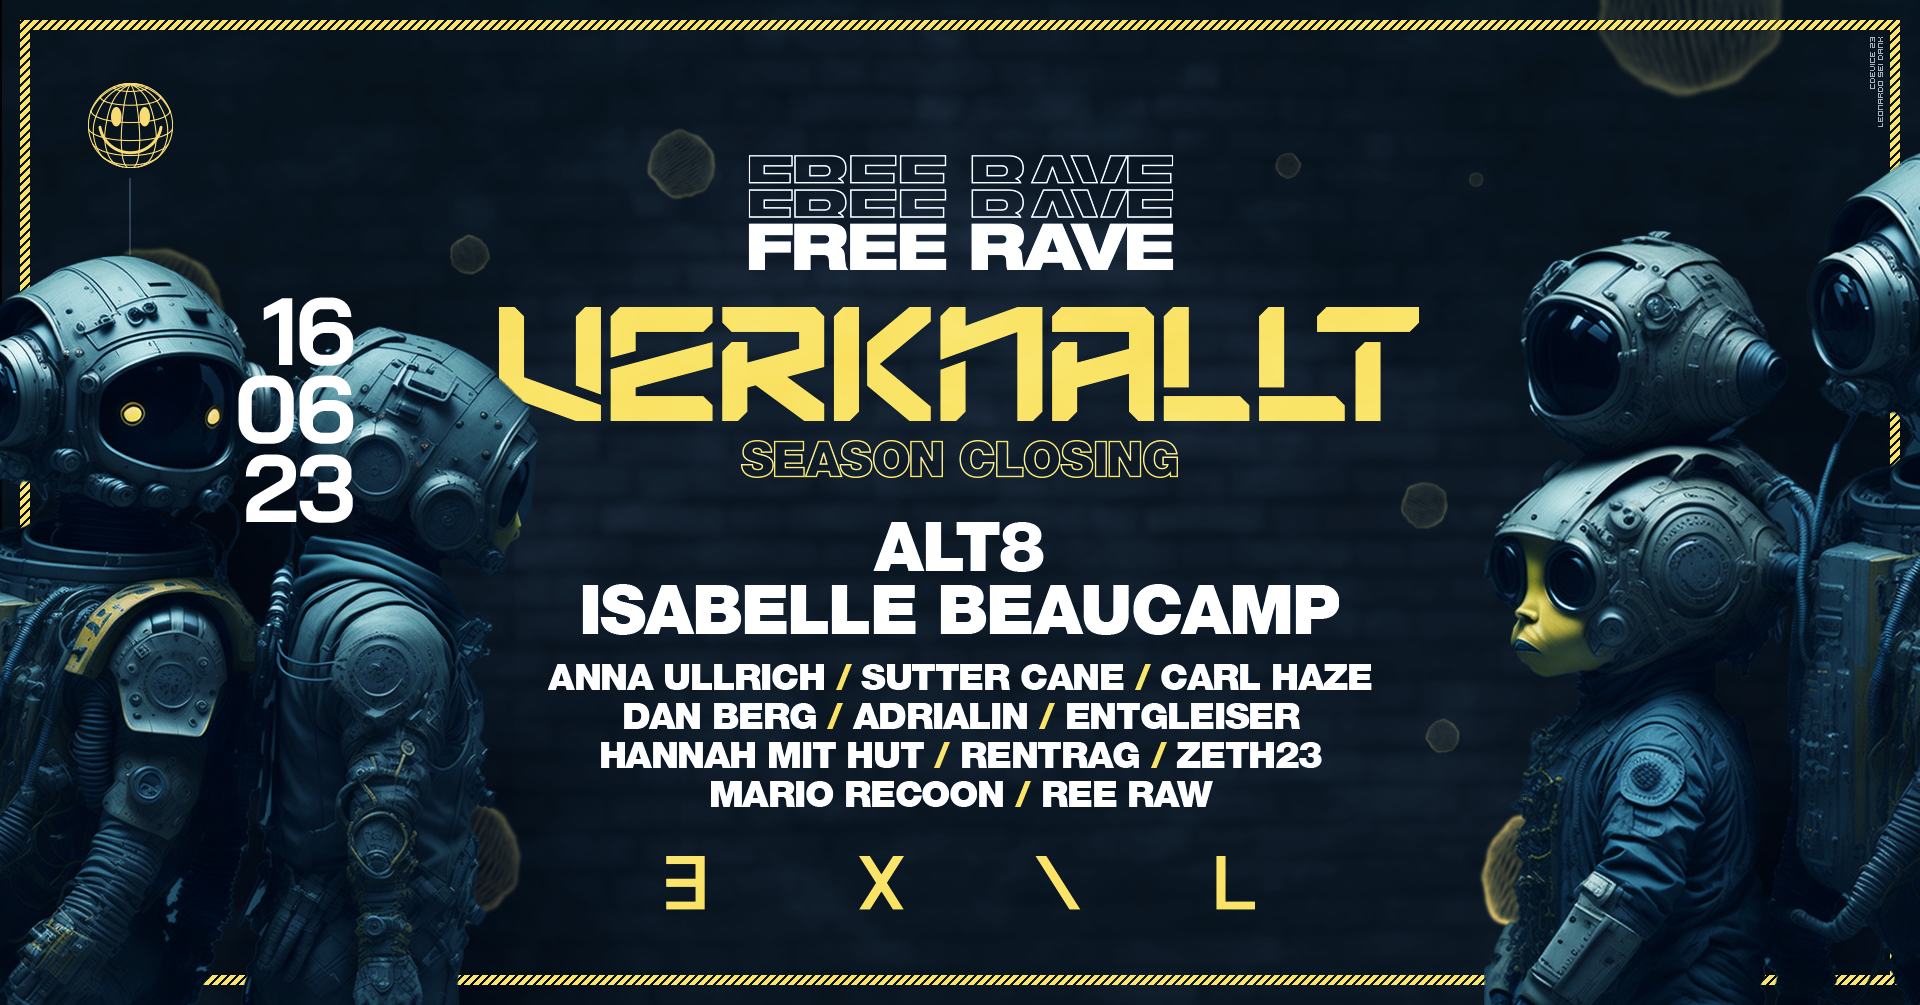 VERKNALLT - FREE RAVE am 16. June 2023 @ EXIL Club.